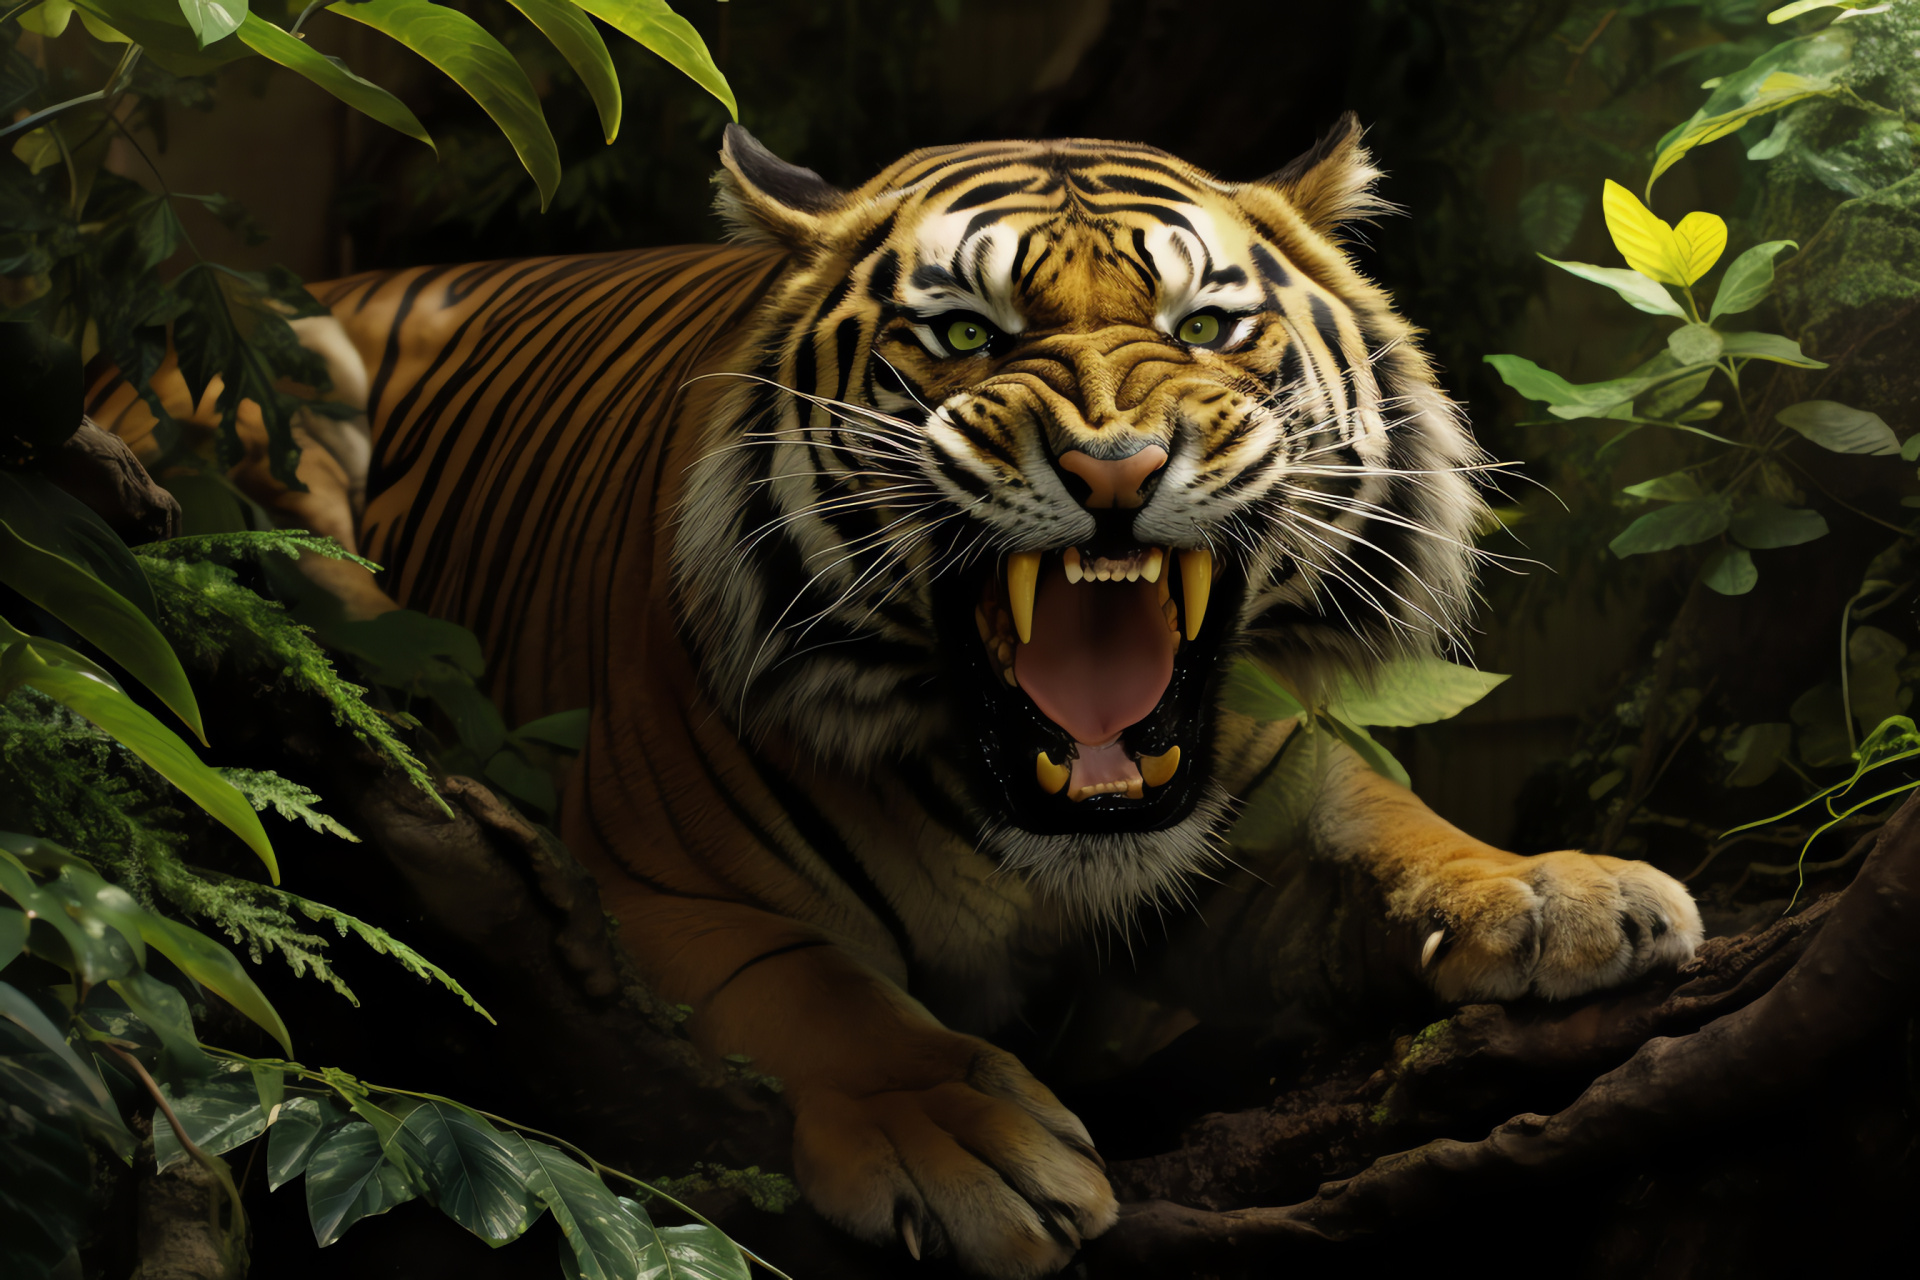 Prehistoric Saber Tooth, Extinct mammal depiction, Jungle habitat, Striped fur pattern, Predatory stance, HD Desktop Image